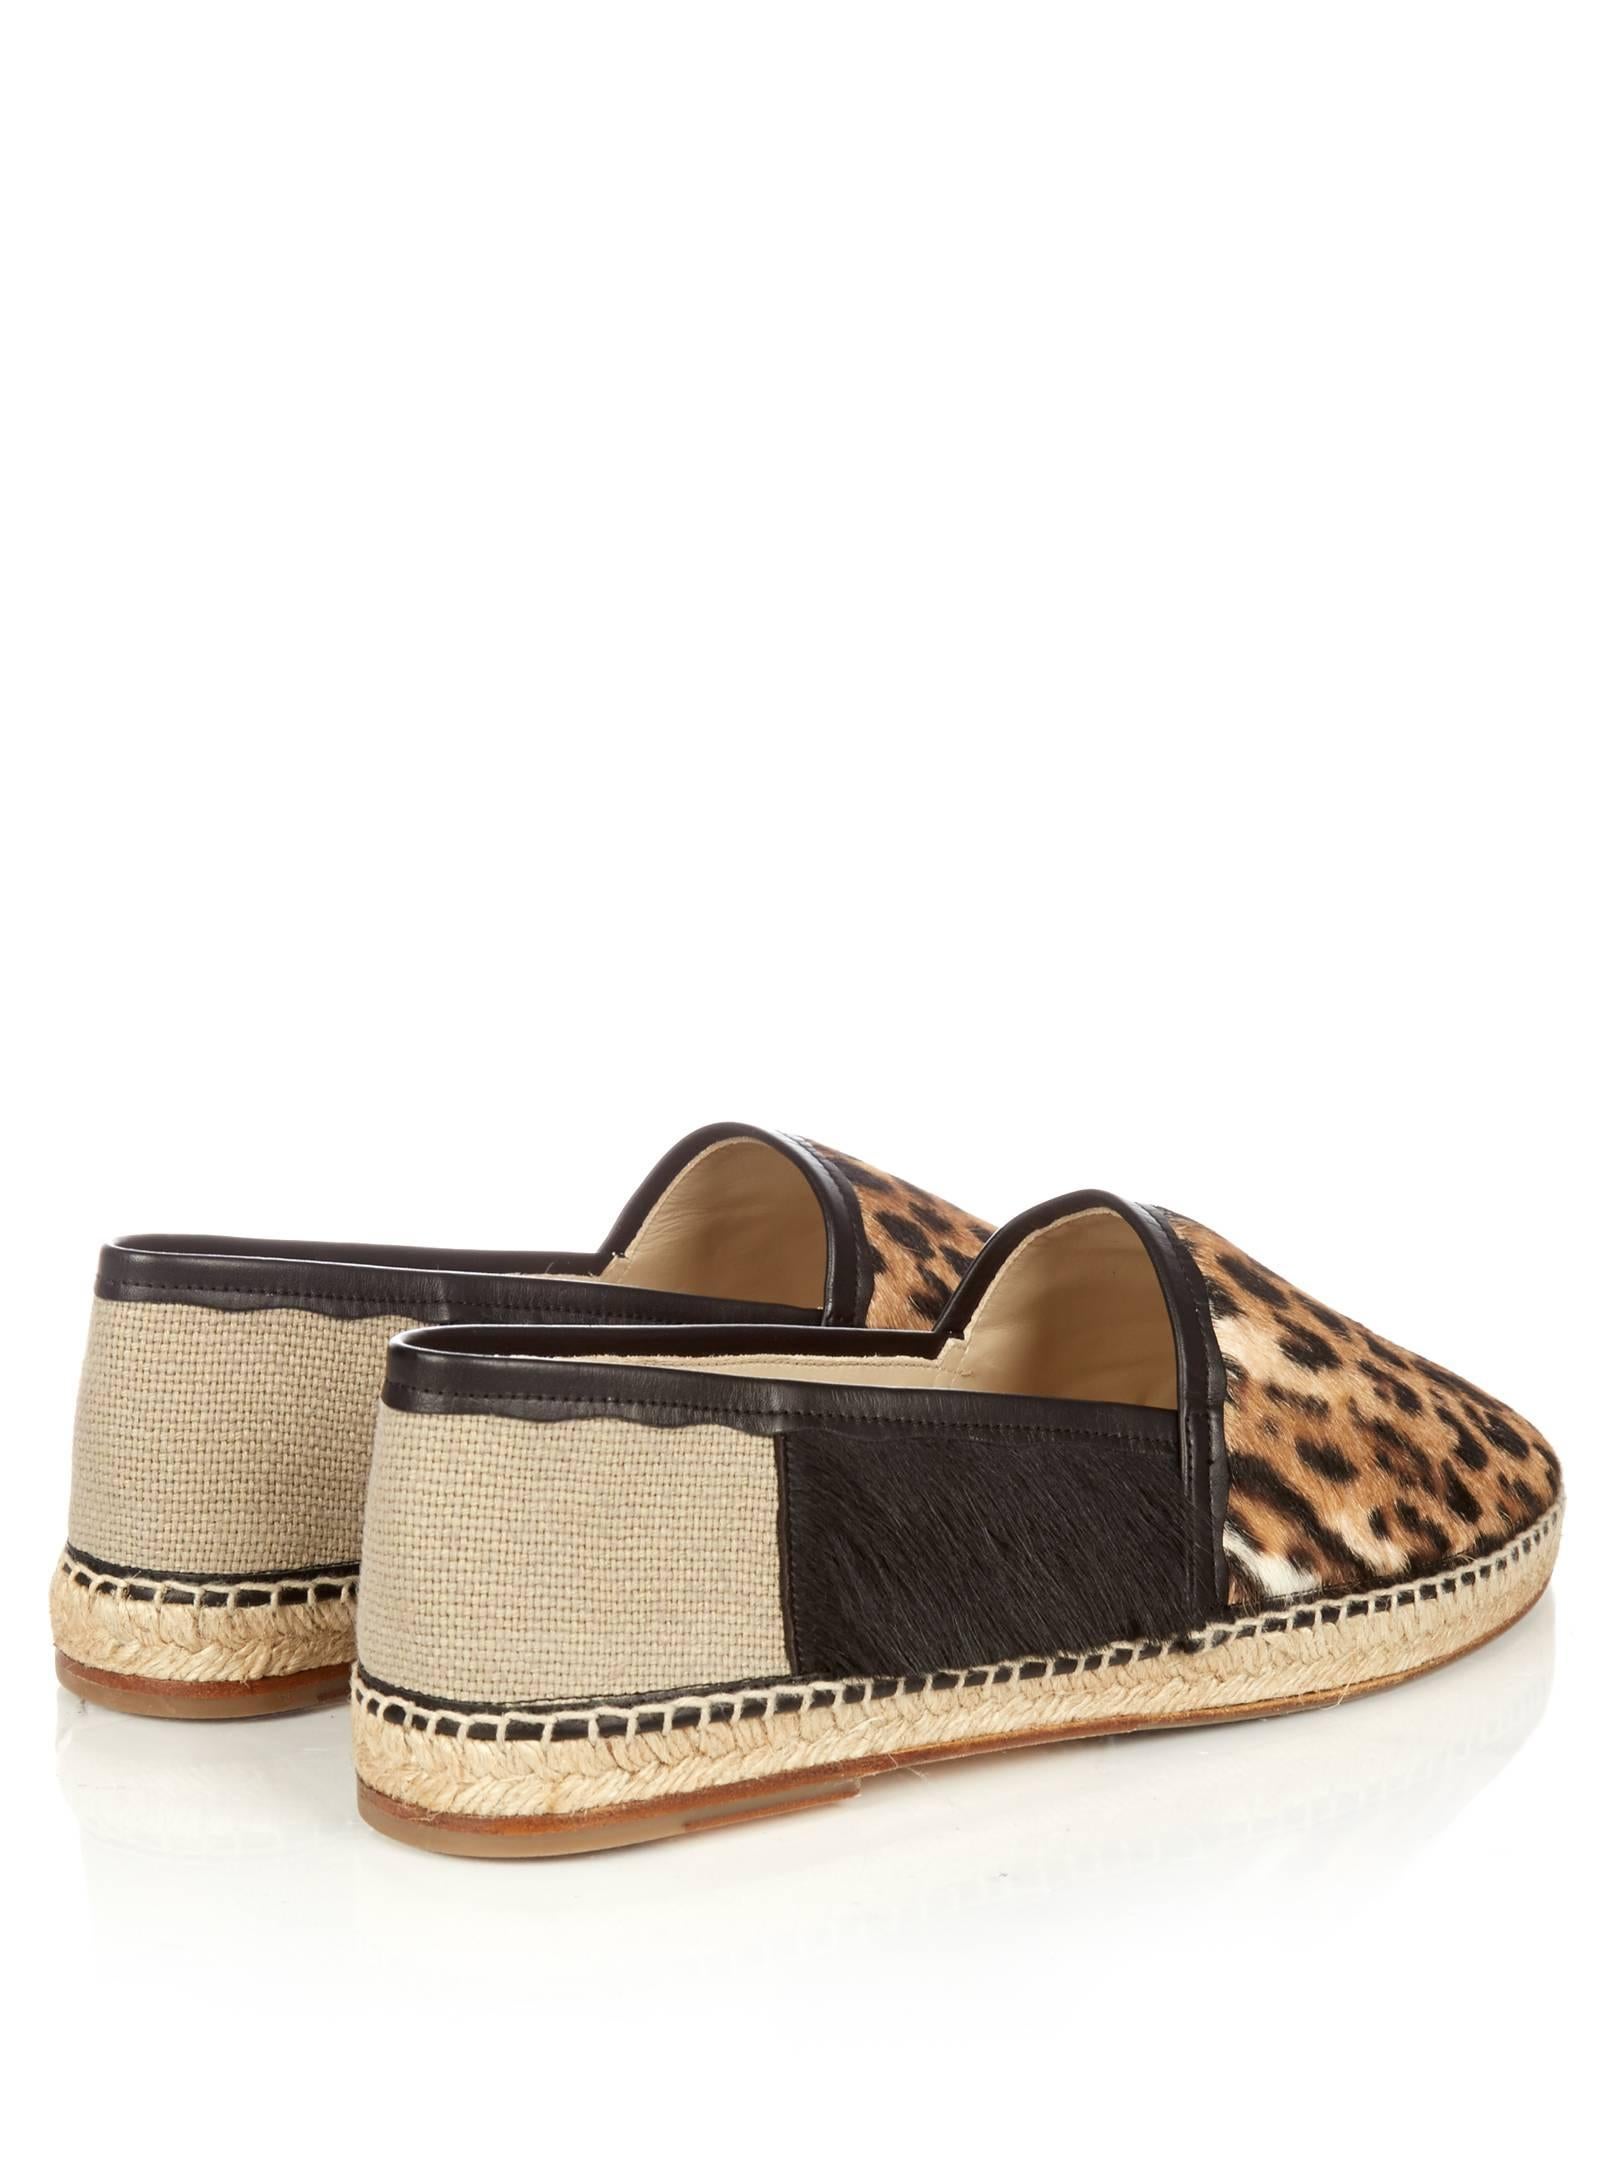 Dolce & Gabbana NEW Men's Black Tan Colorblock Calf Hair Loafers Slippers in Box 1